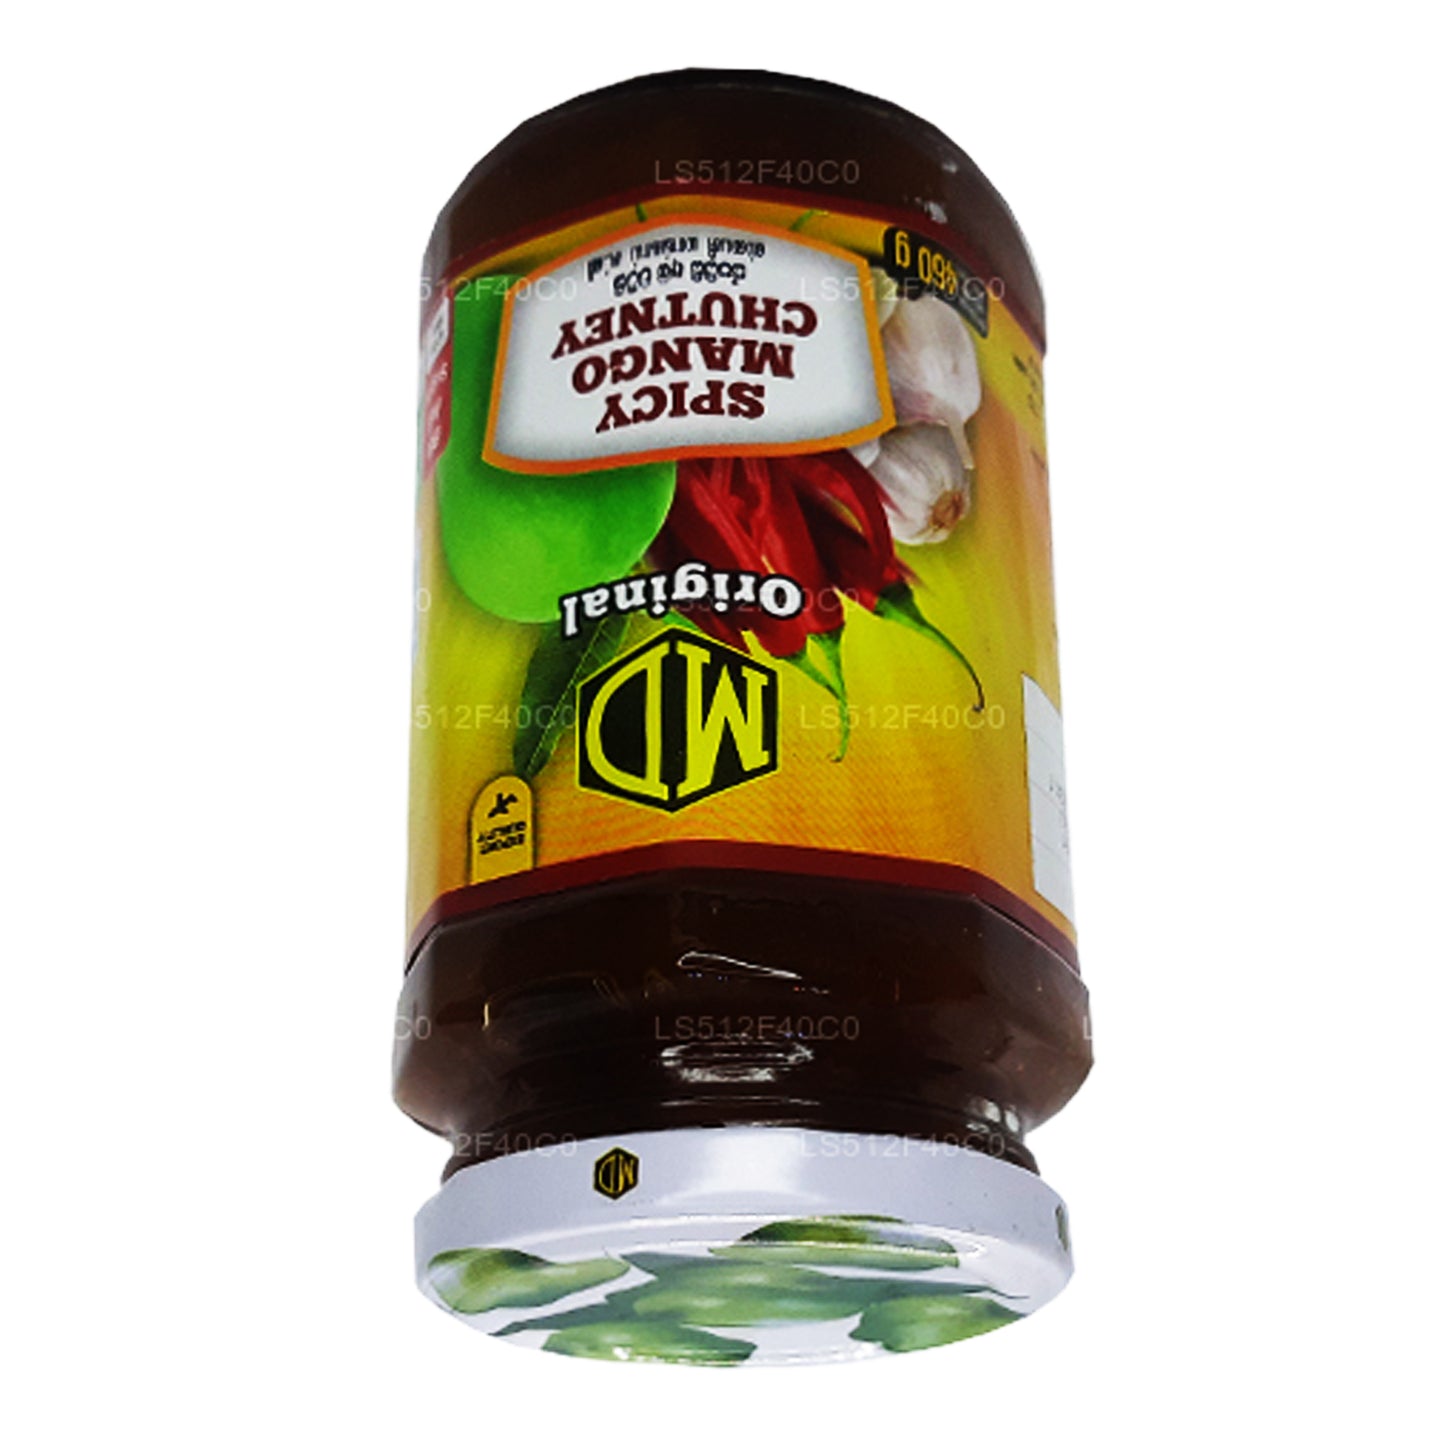 MD Spicy Mango Chutney (500 g)